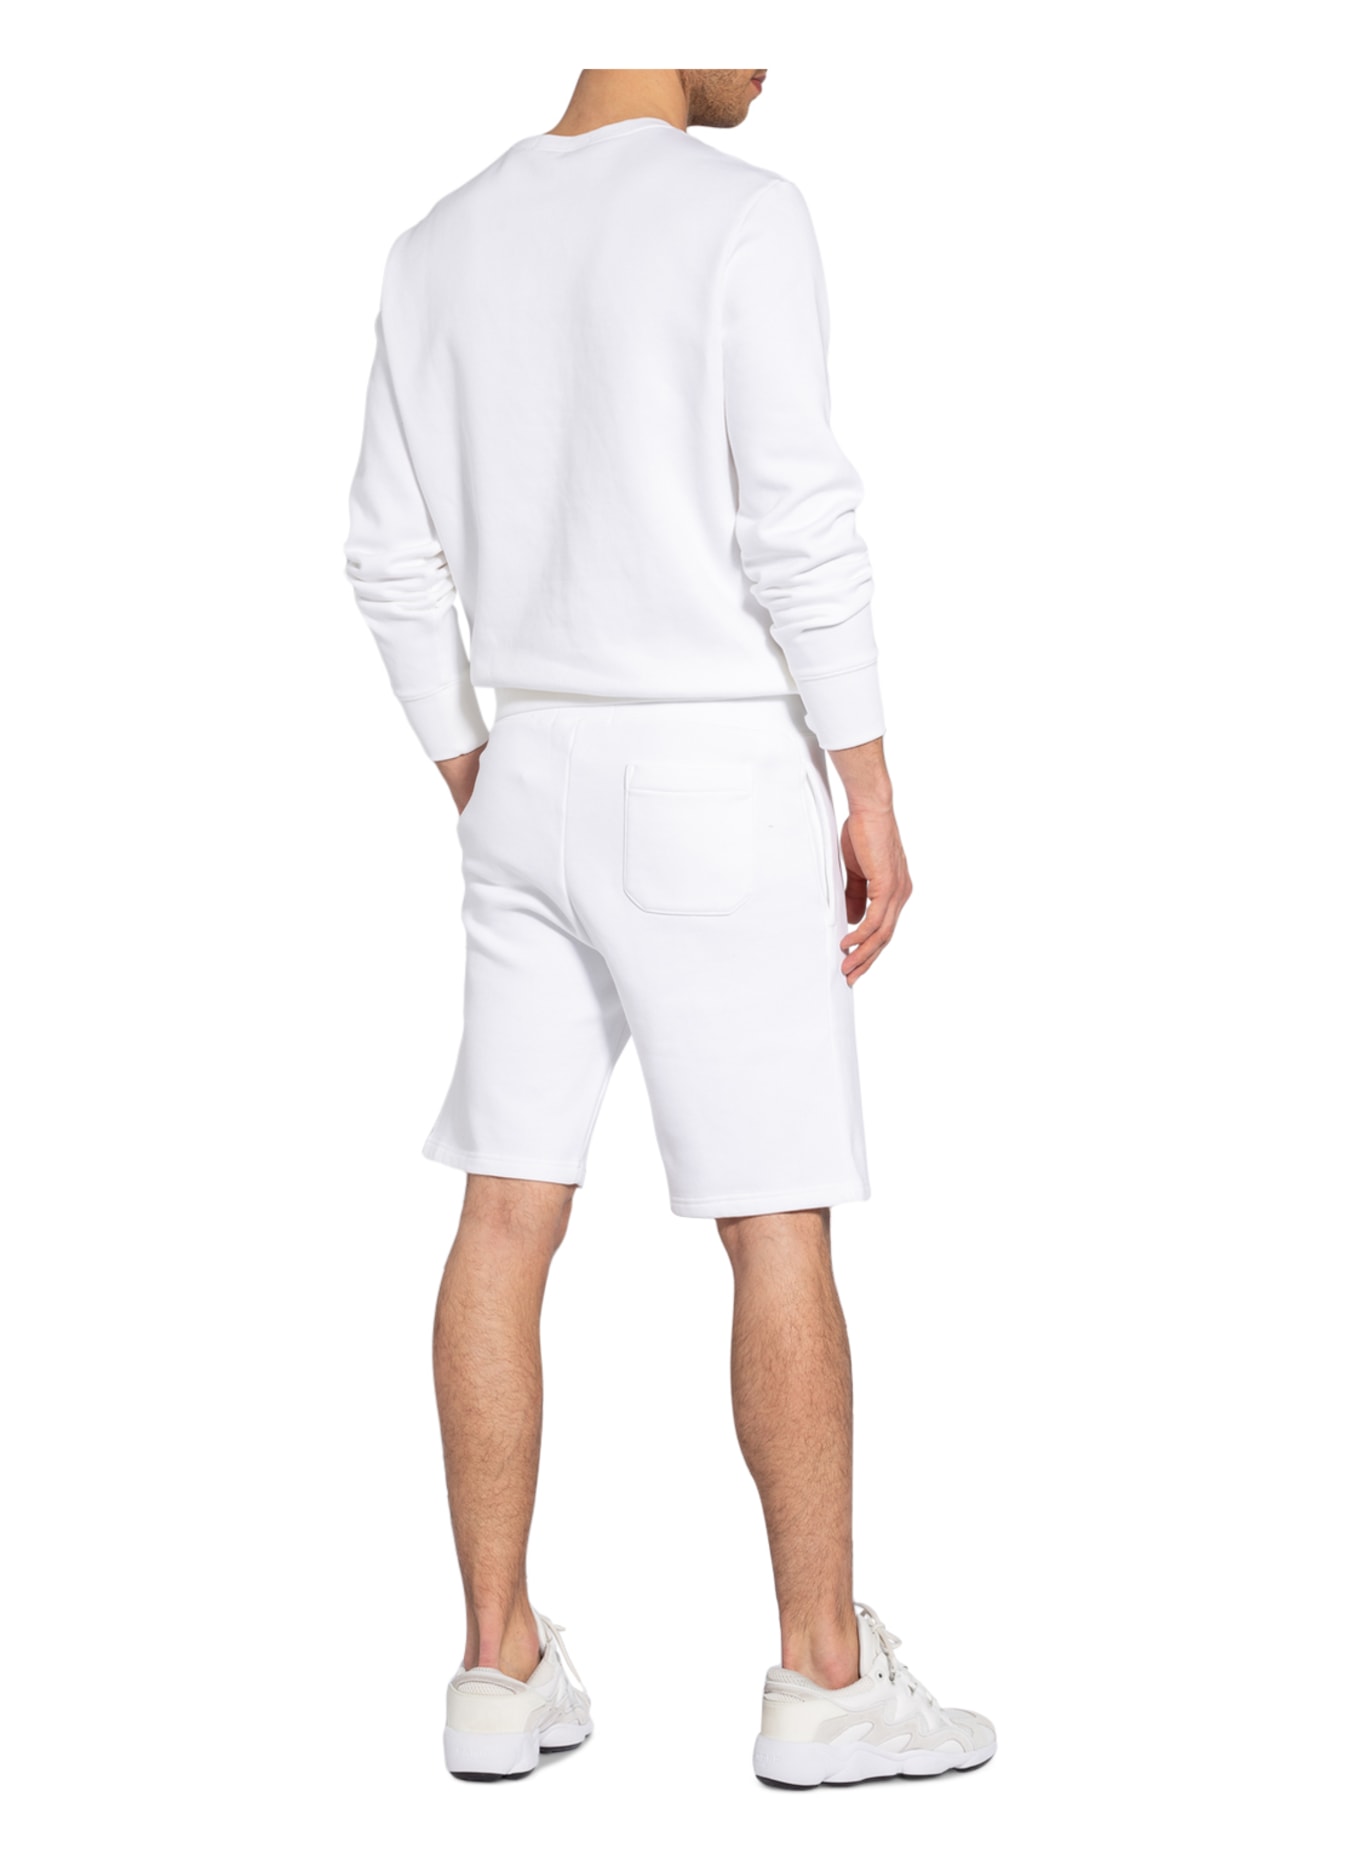 POLO SPORT Sweatshirt , Color: WHITE (Image 4)